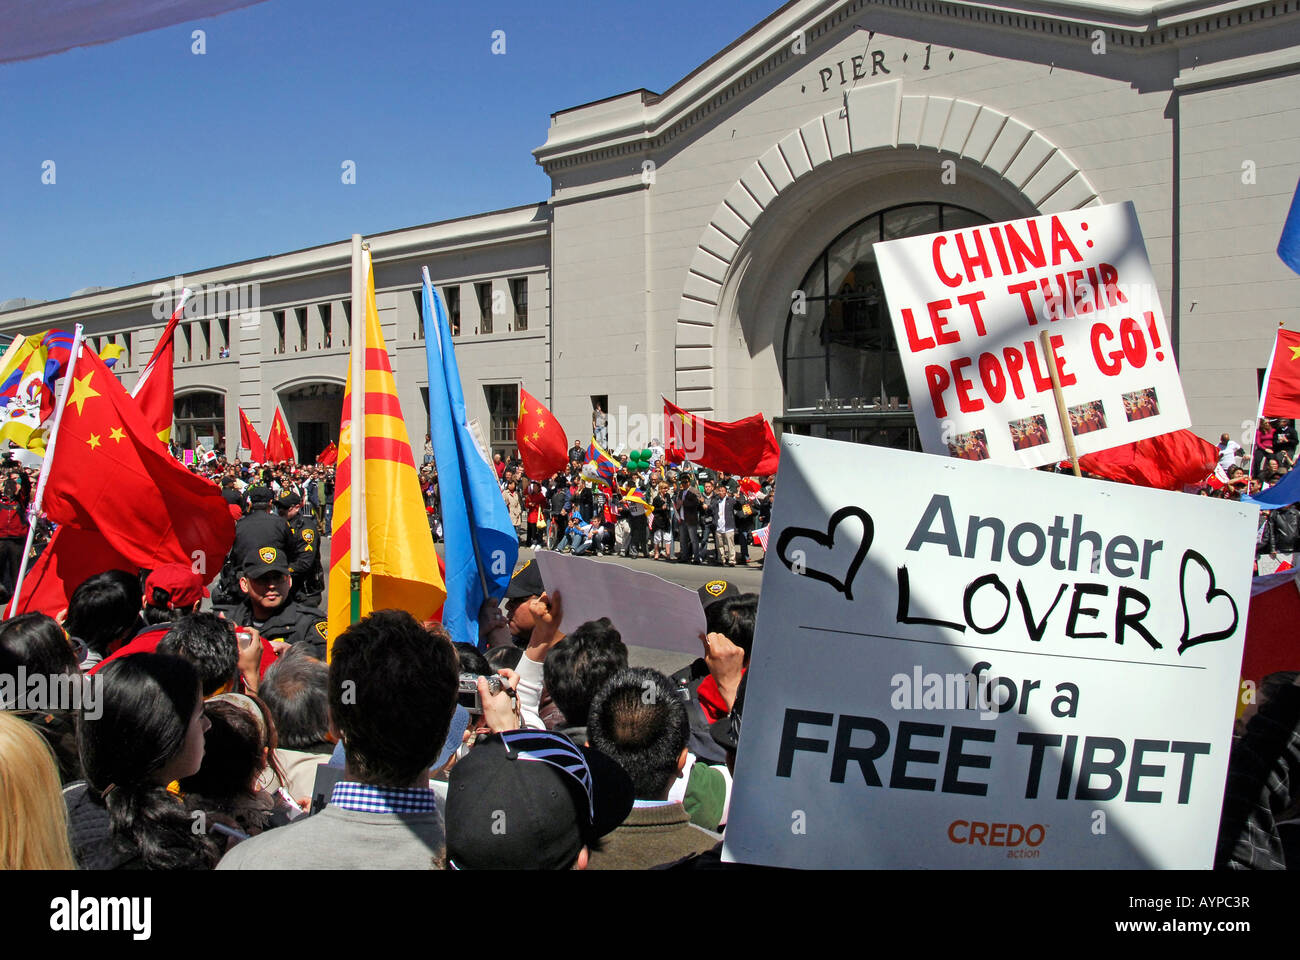 "Antorcha Olímpica de recepción, '^protesta anti-China', 'San Francisco', ^9 de abril de 2008" Foto de stock